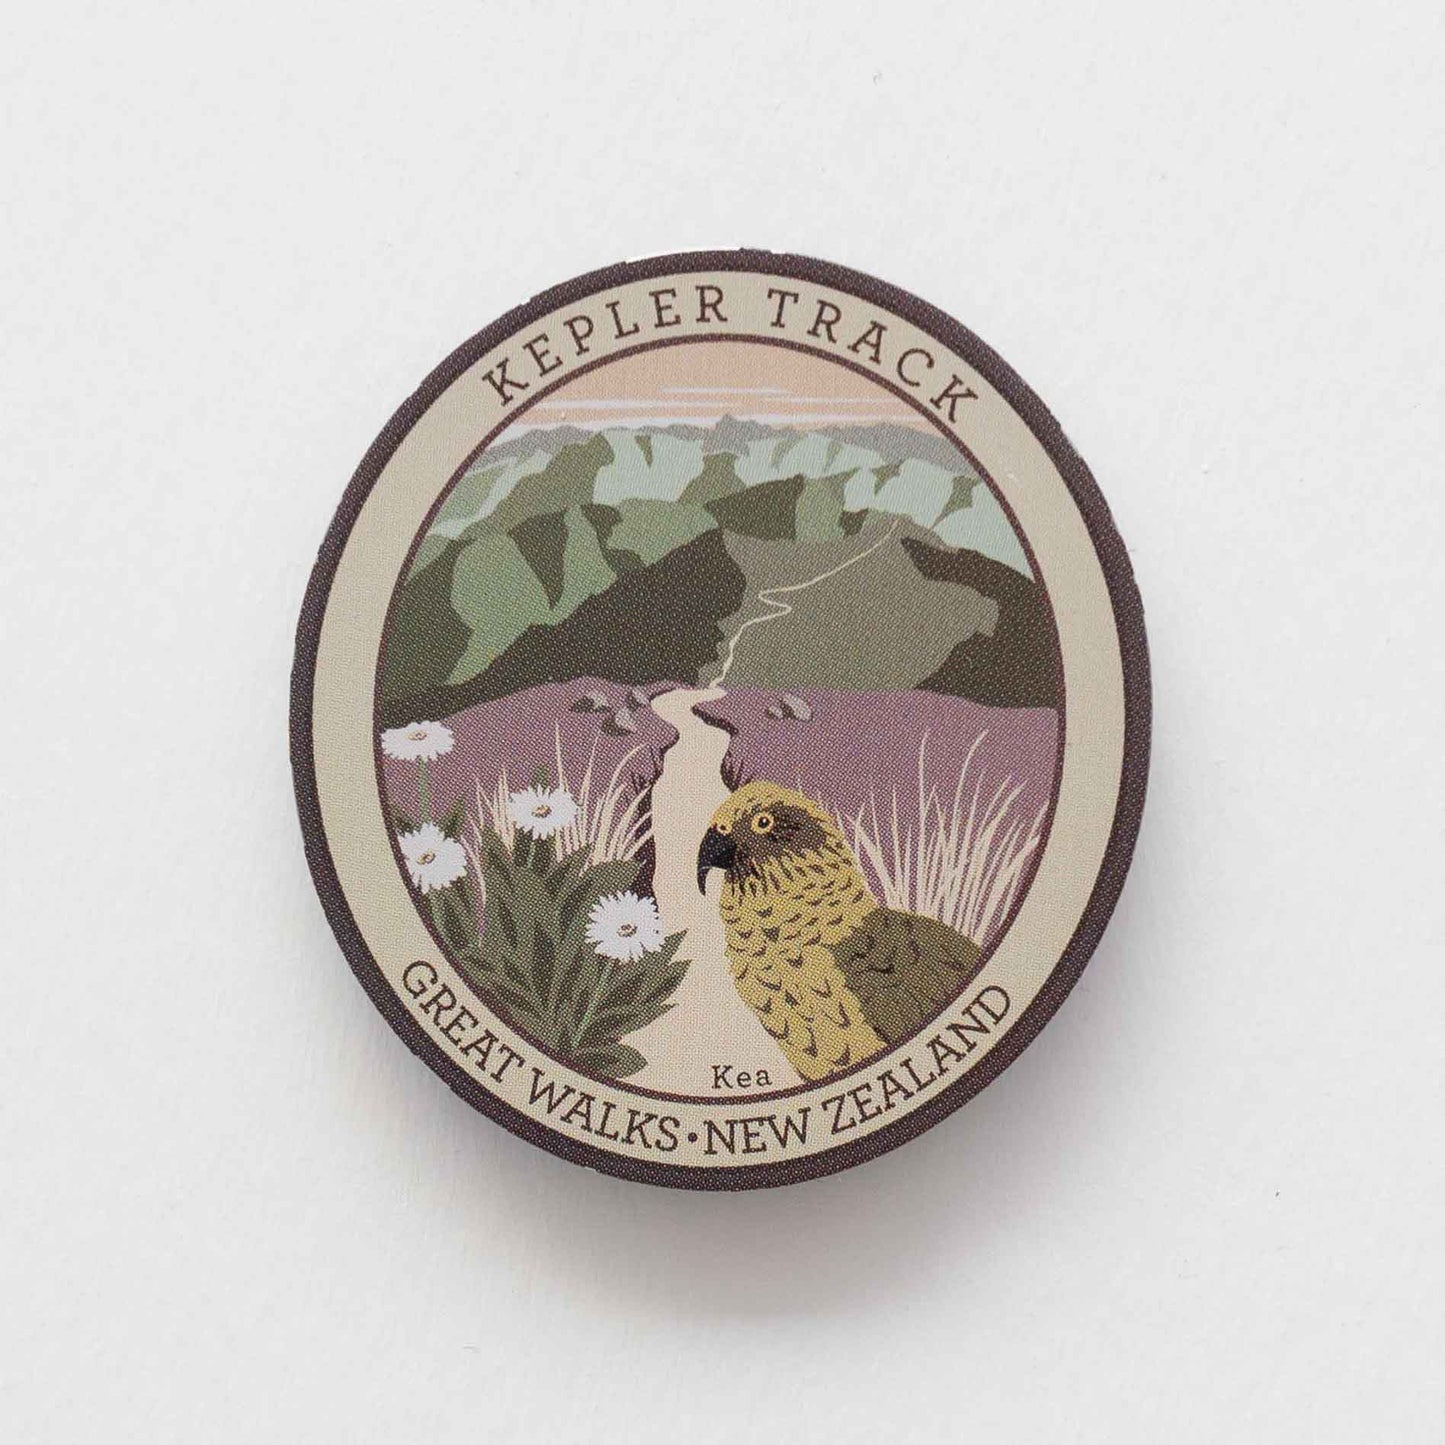 Oval Kepler Track pin, with a kea, mountain daisy and alpine ridges.